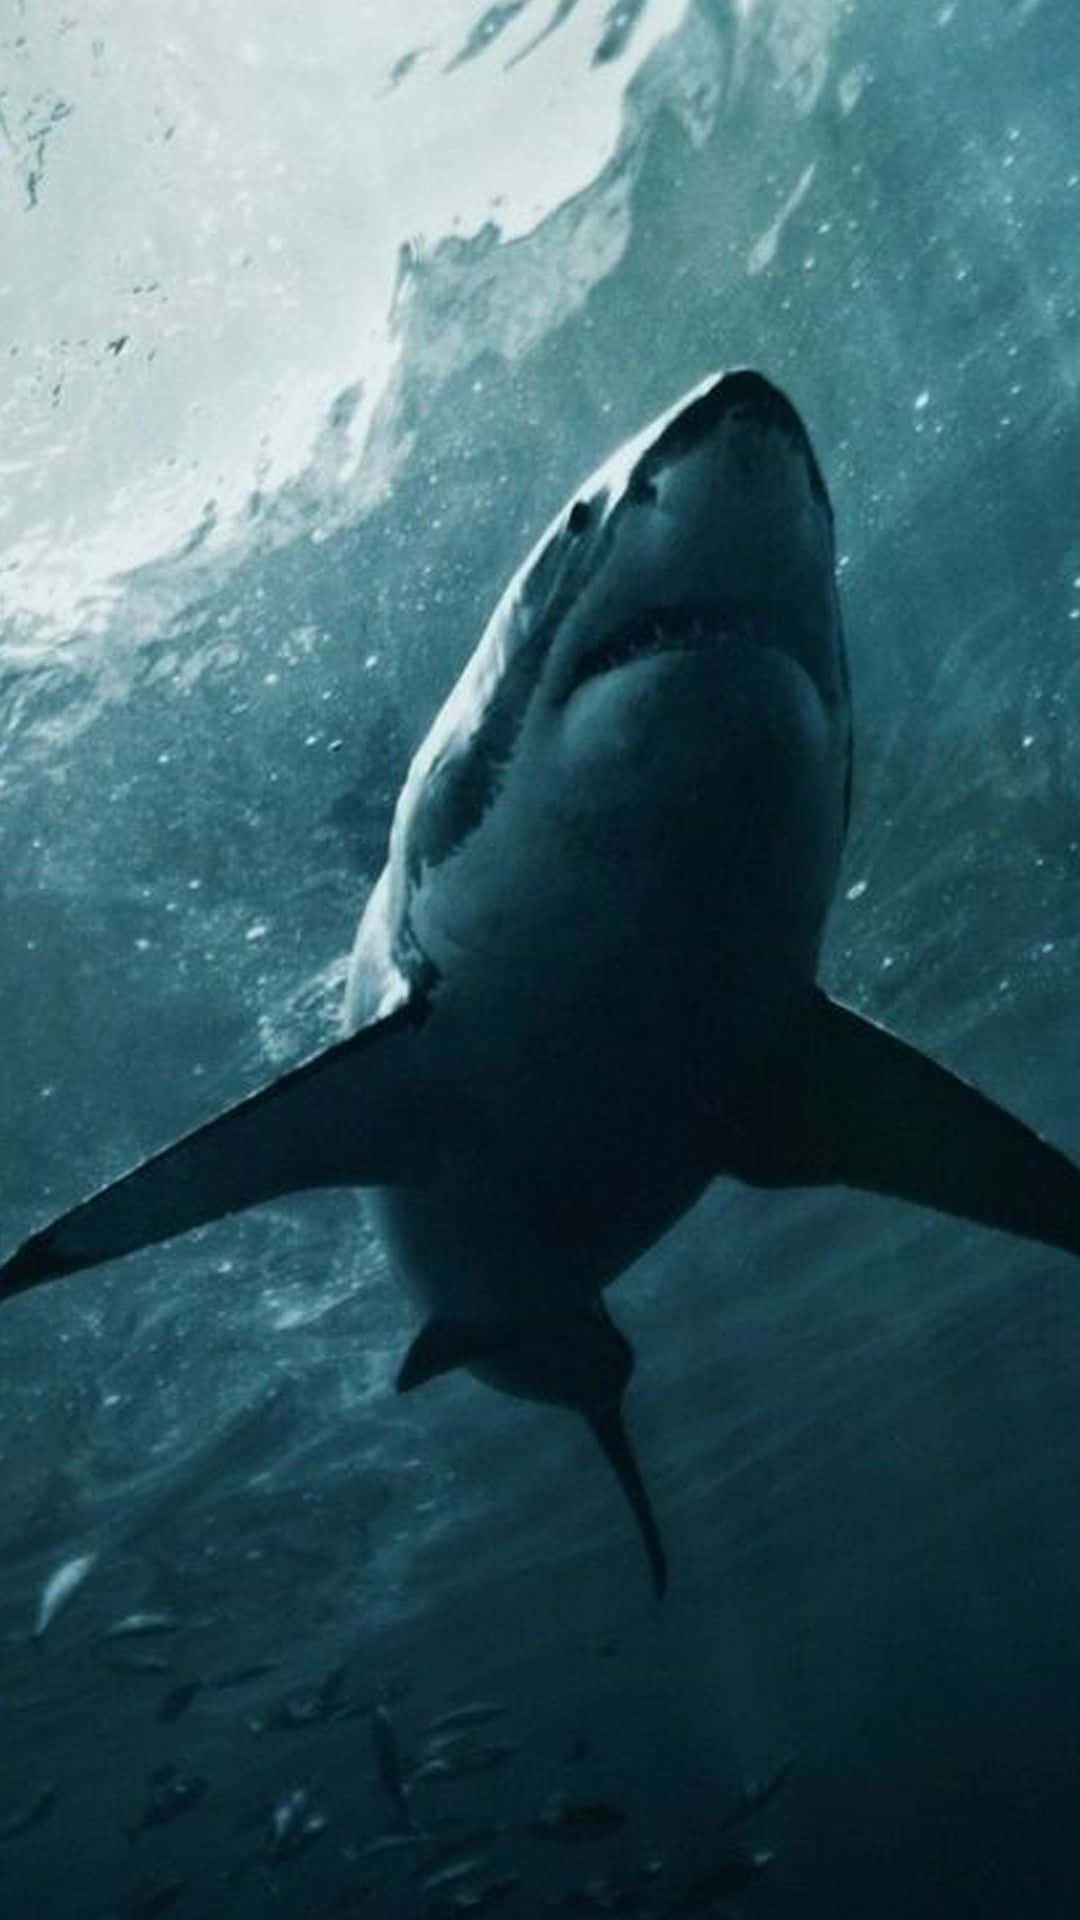 A Great White Shark Swimming Through the Ocean Depths